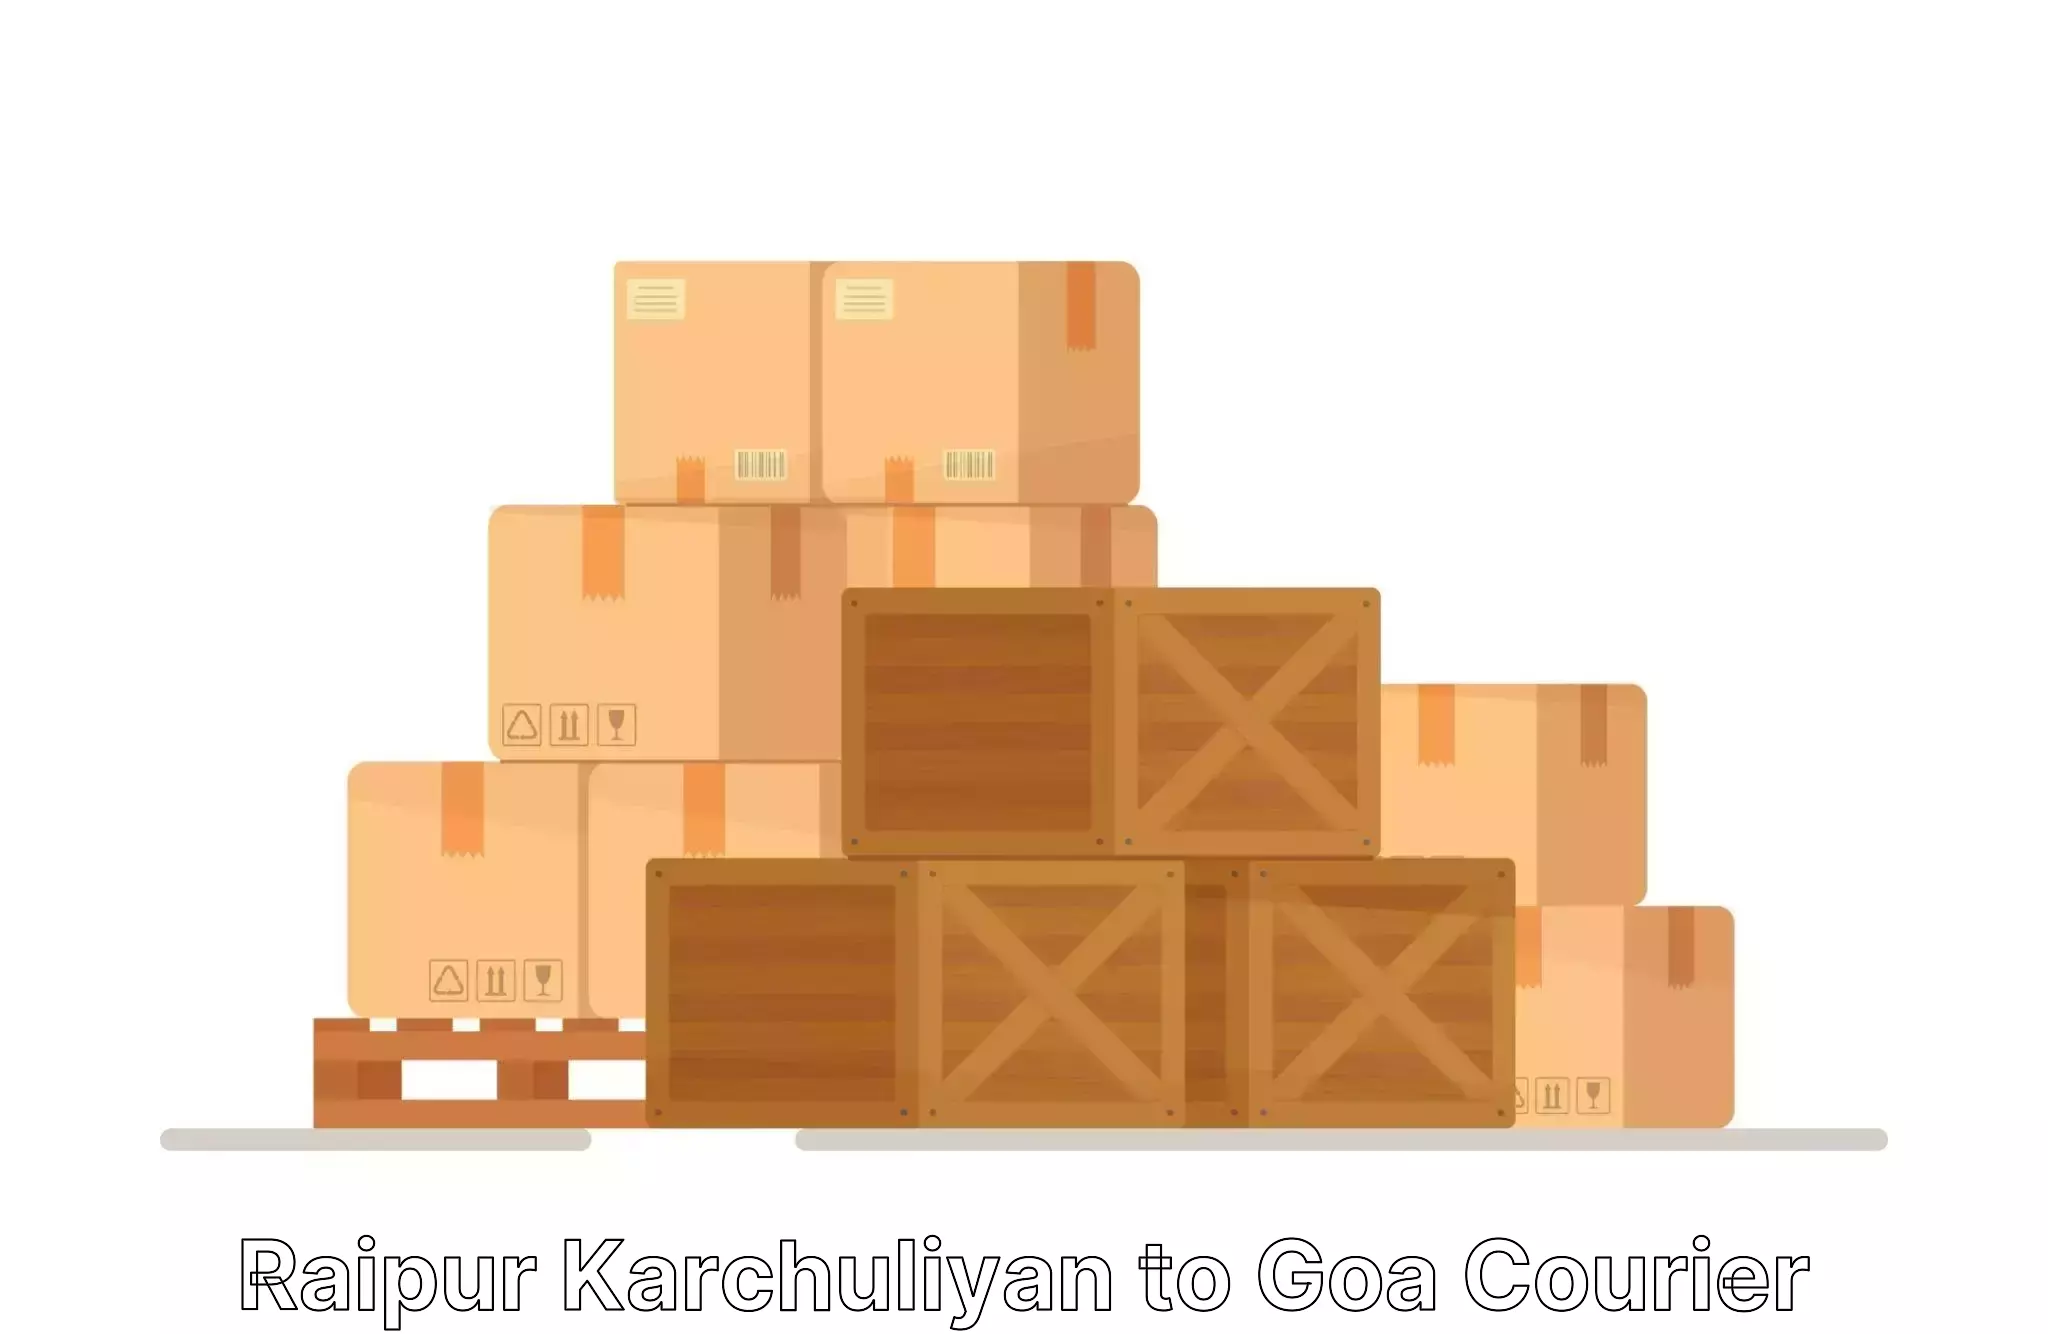 Quality moving company Raipur Karchuliyan to Goa University